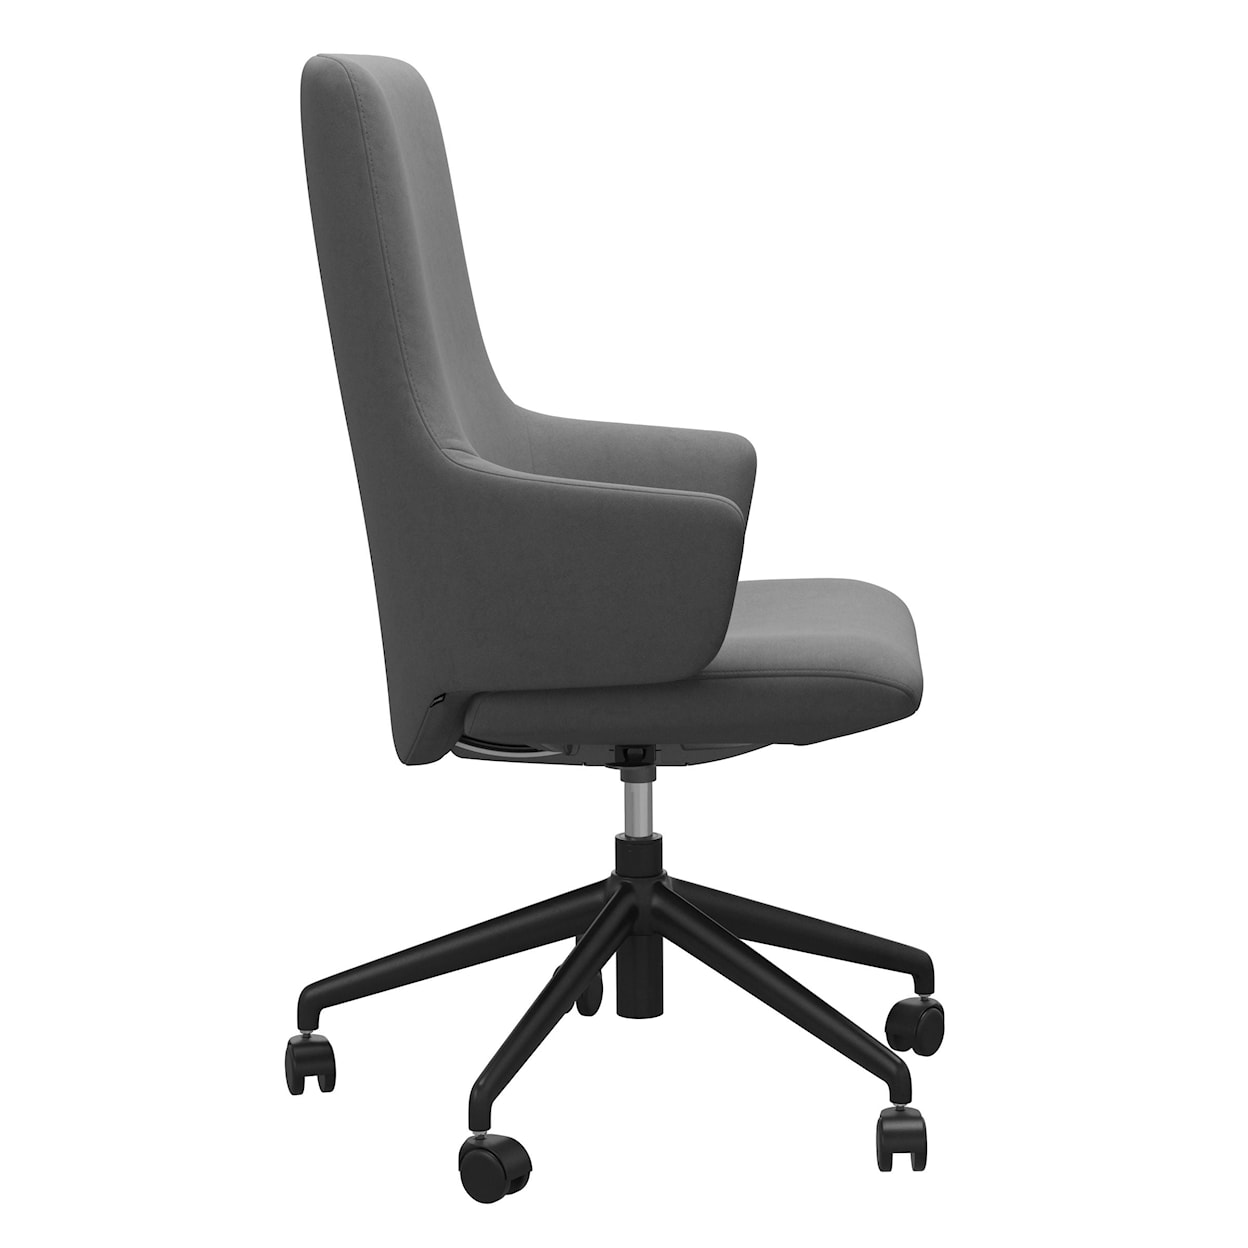 Stressless by Ekornes Laurel Laurel Large High-Back Office Chair w Arms